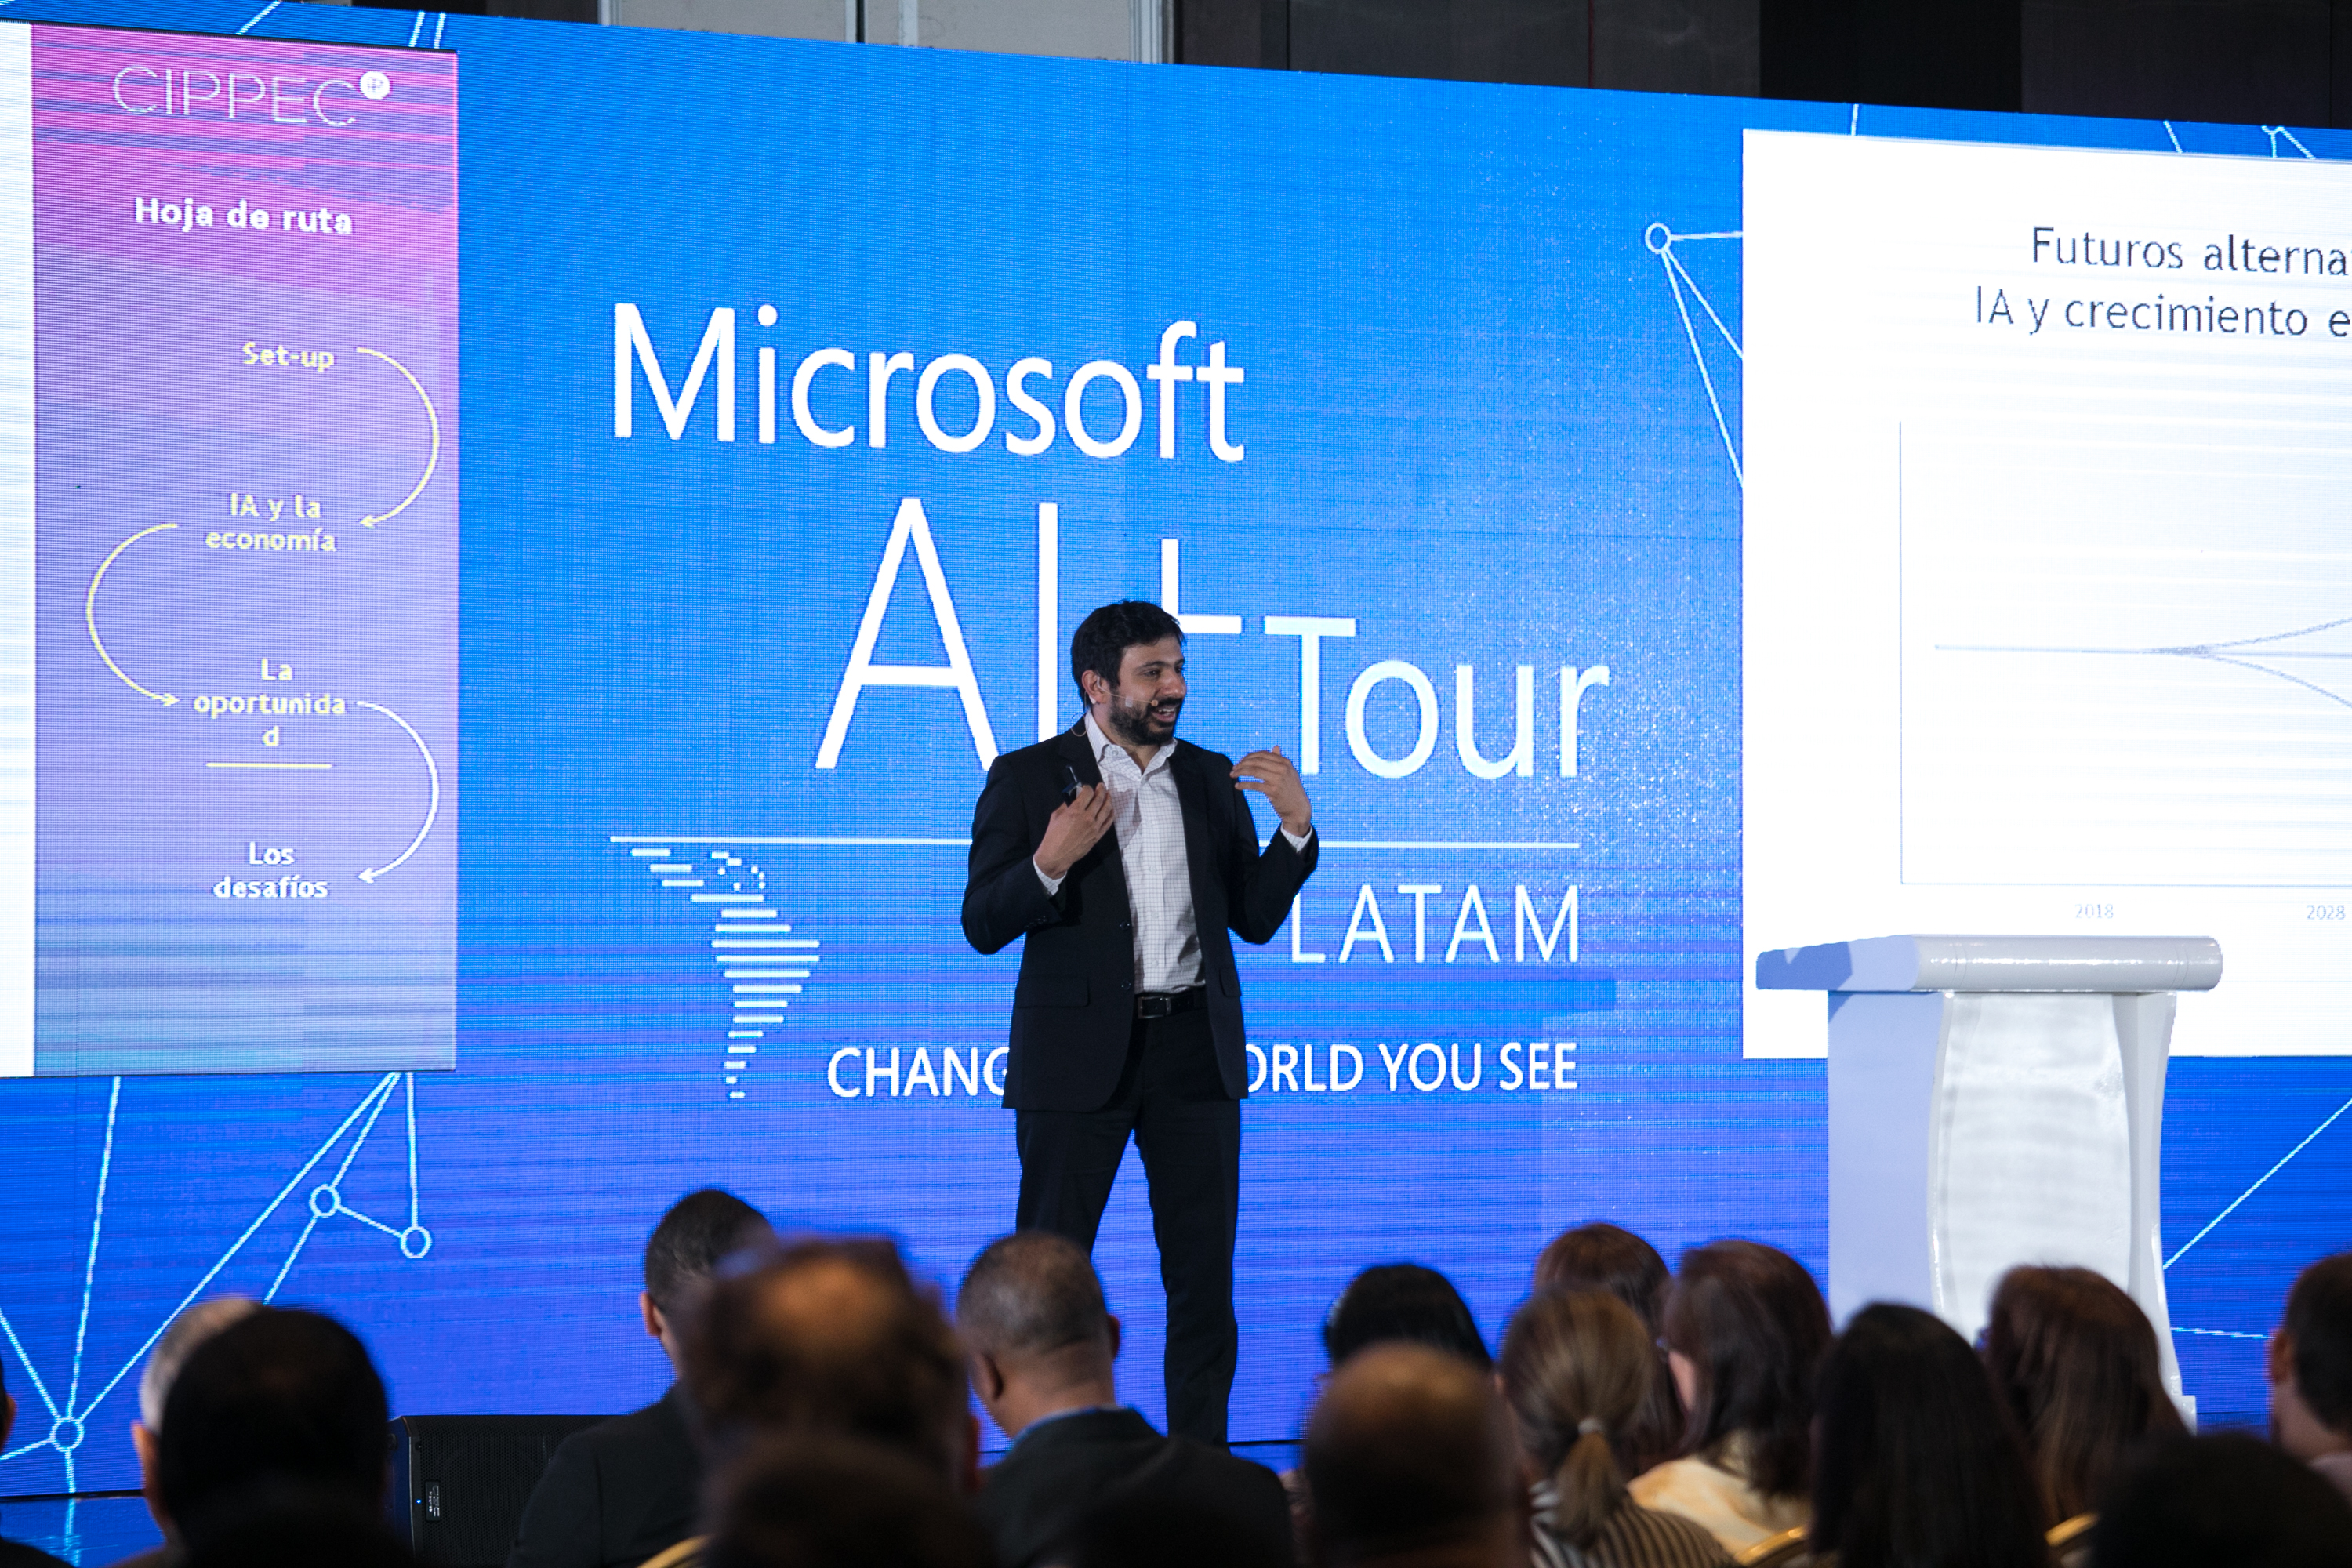 Imagen de Ramiro Albrieu (CIPPEC) en el AI Tour de Microsoft, hablándole al auditorio